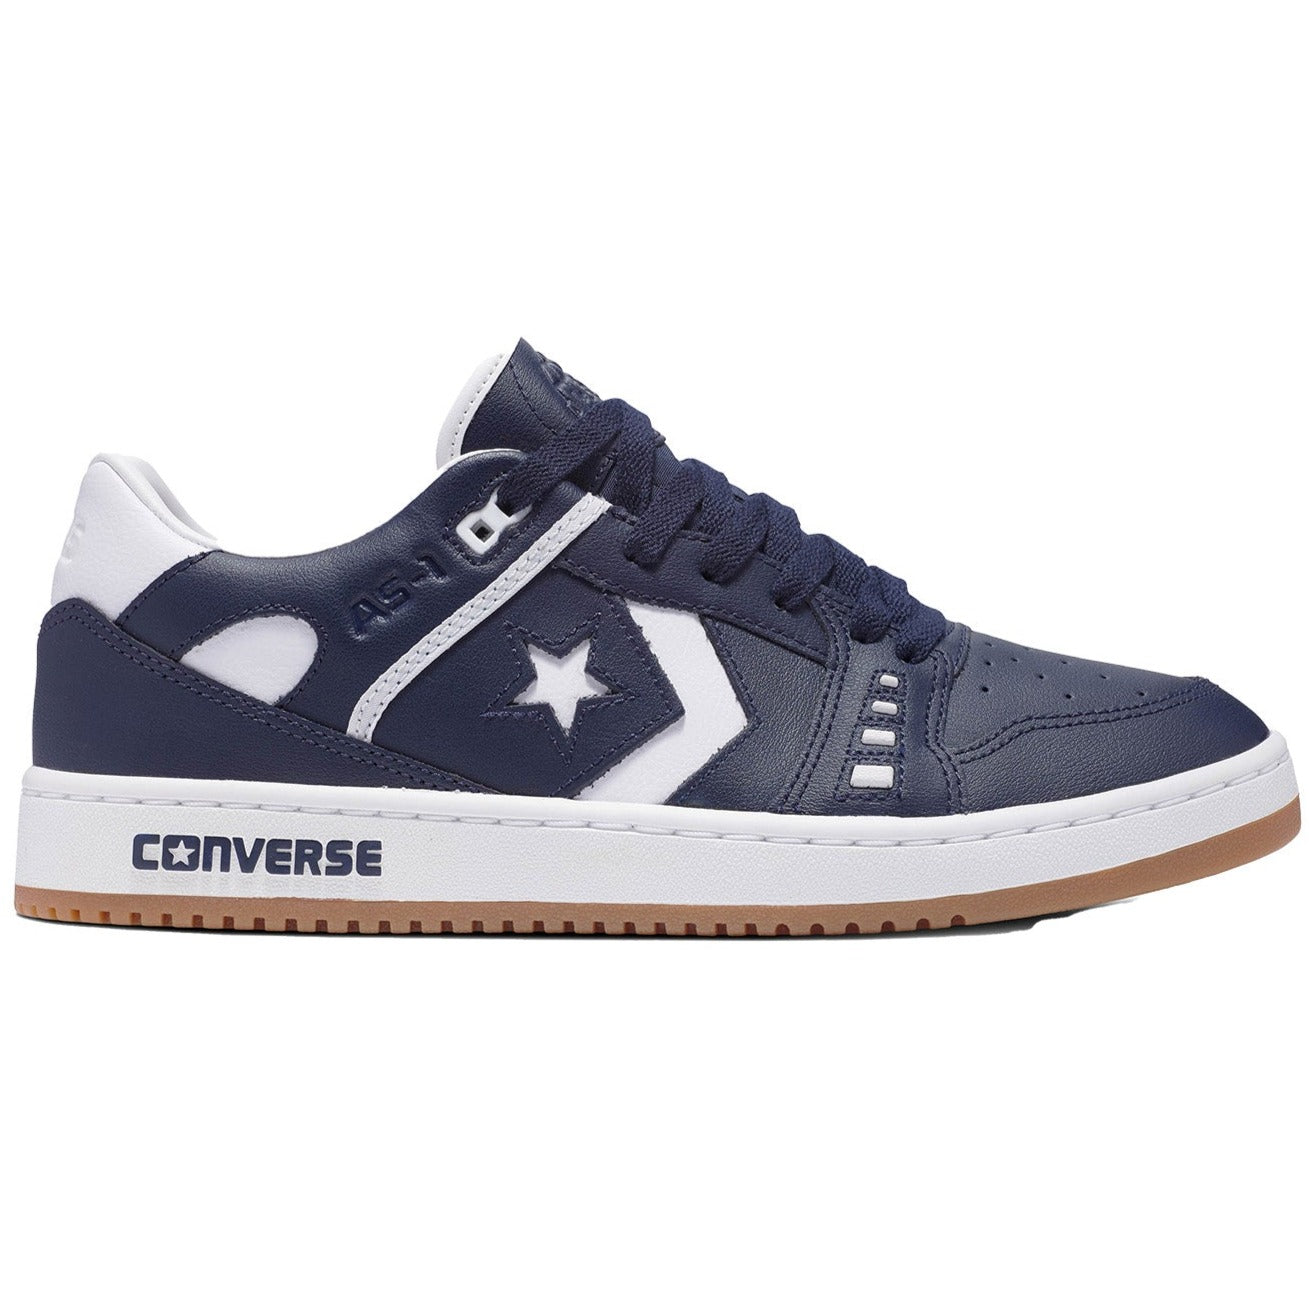 Converse CONS AS-1 OX Obsidian/White/Gum Orchard Skateshop